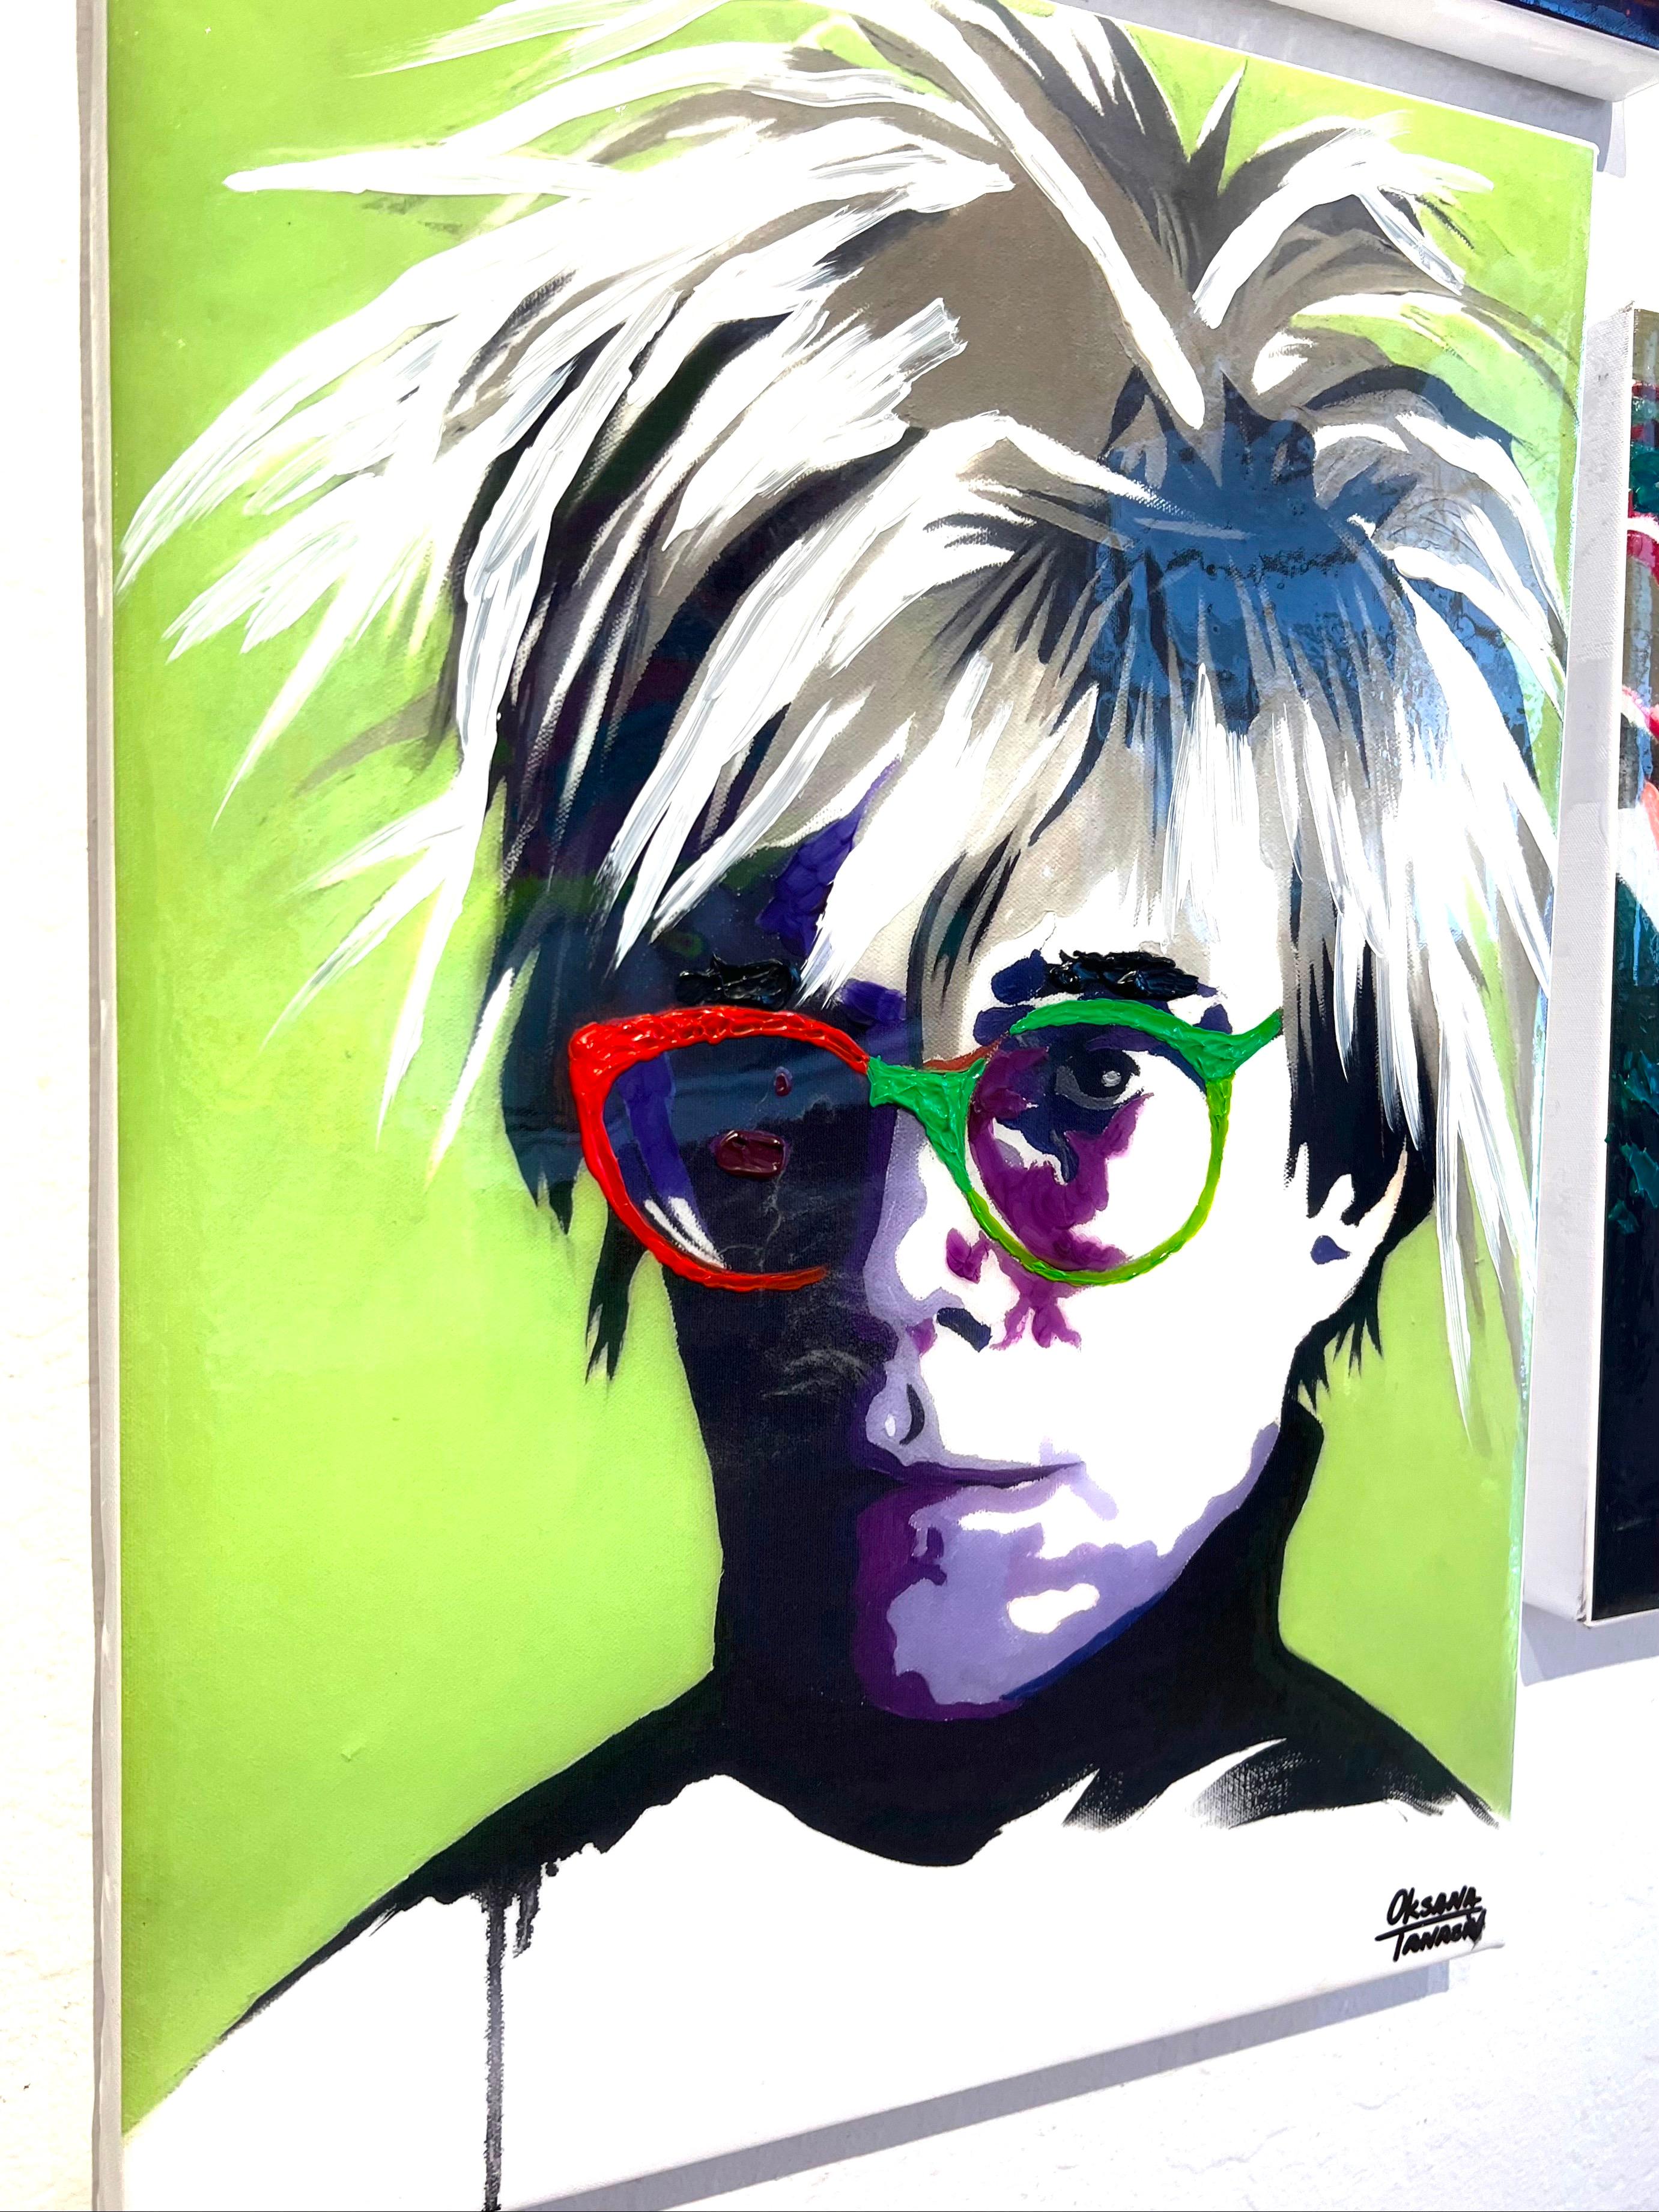 Andy Warhol. Celebrities Portraits, Pop-art. - Print by Oksana Tanasiv